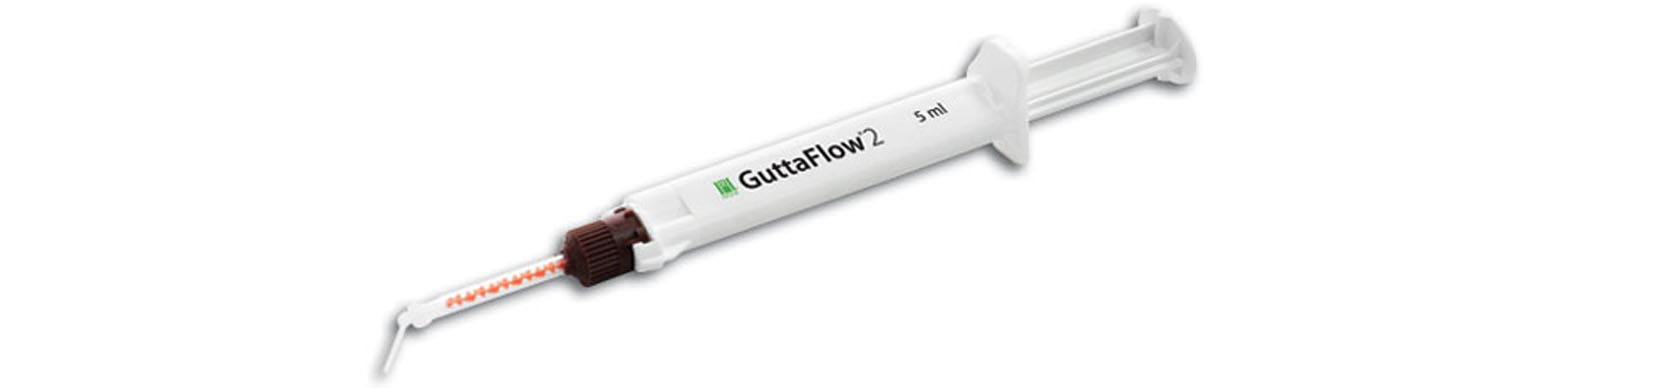 Guttaflow2